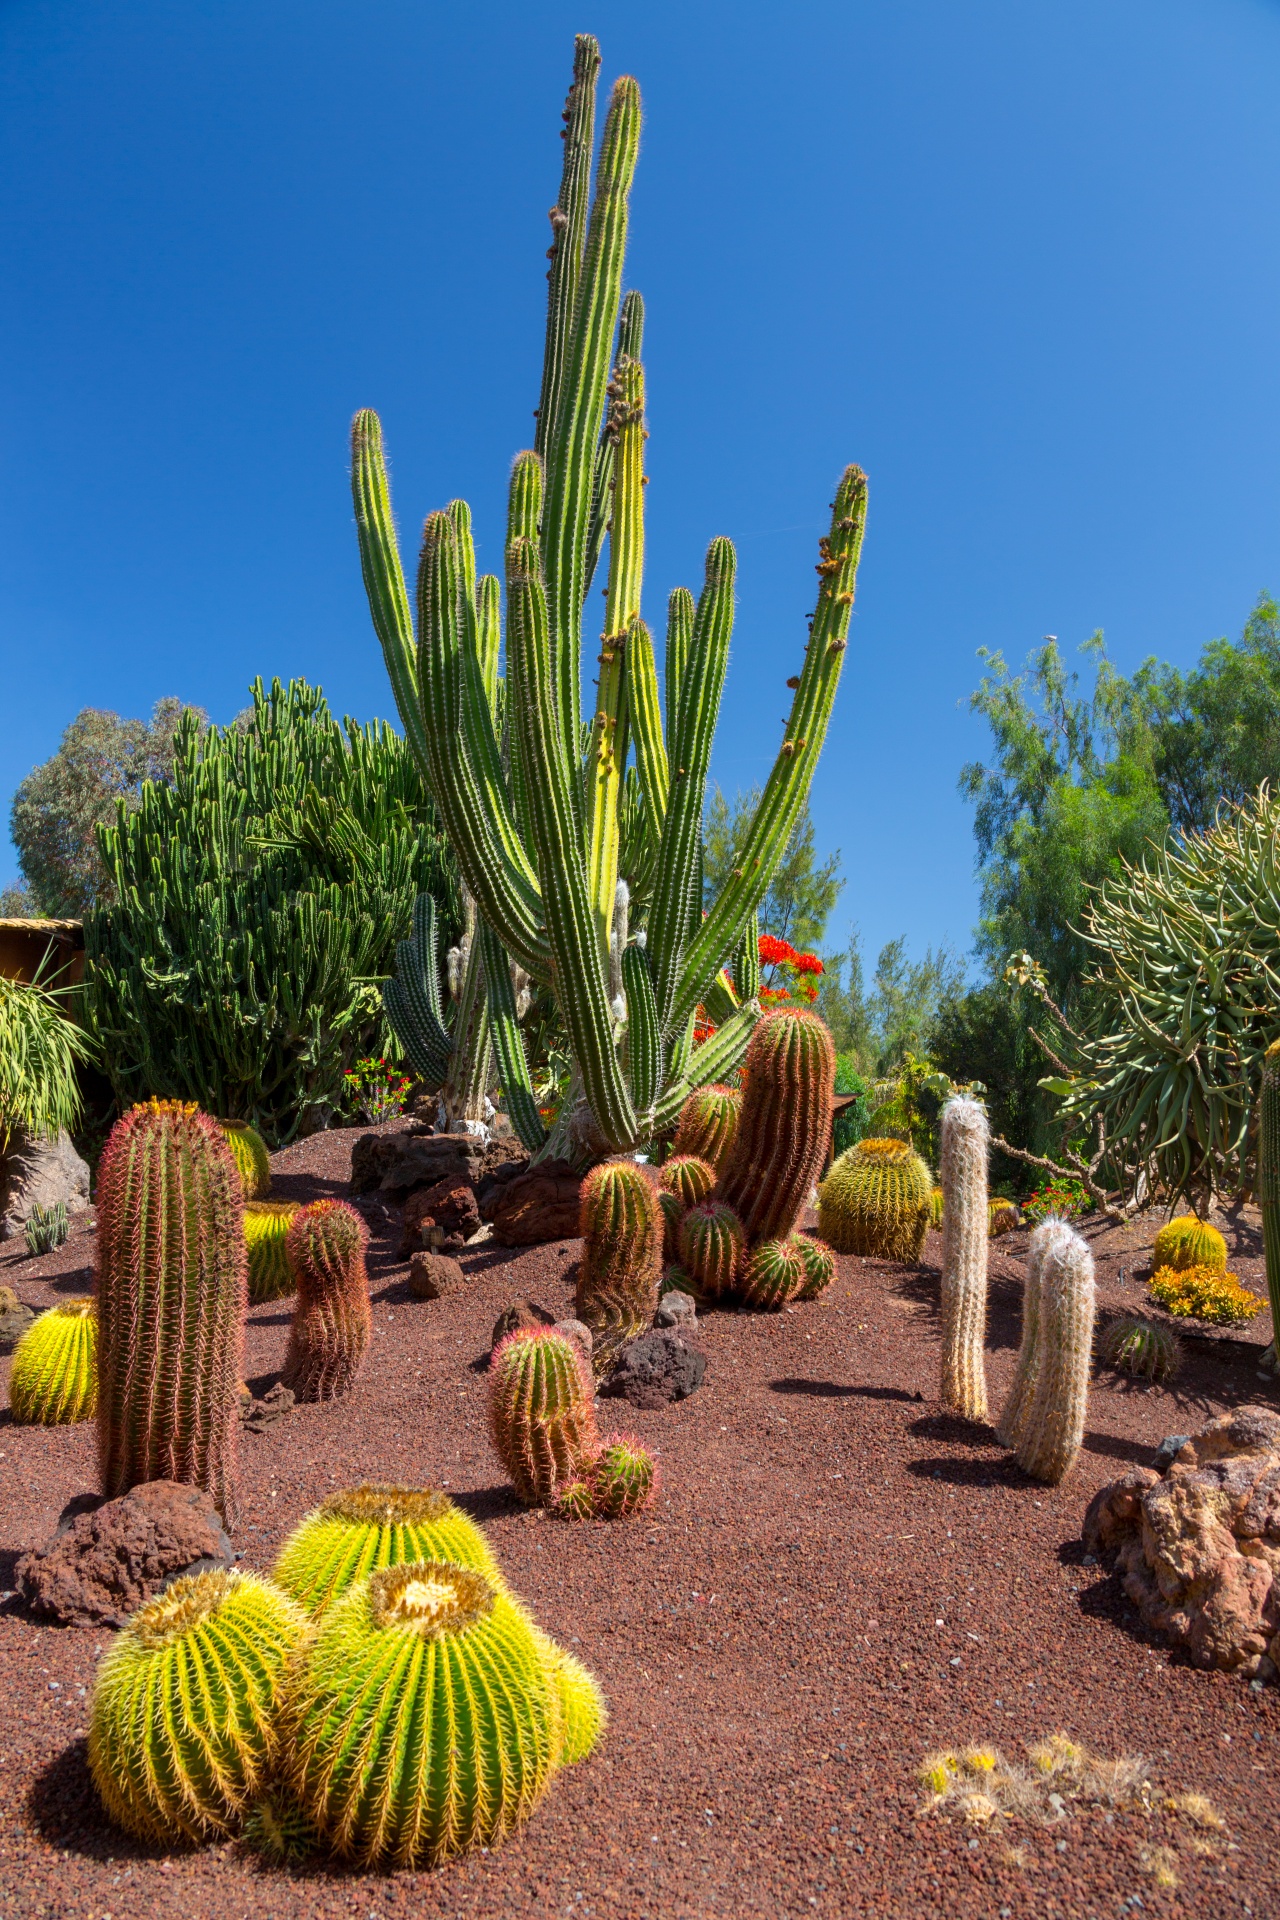 Kaktus Garten Kostenloses Stock Bild   Public Domain Pictures